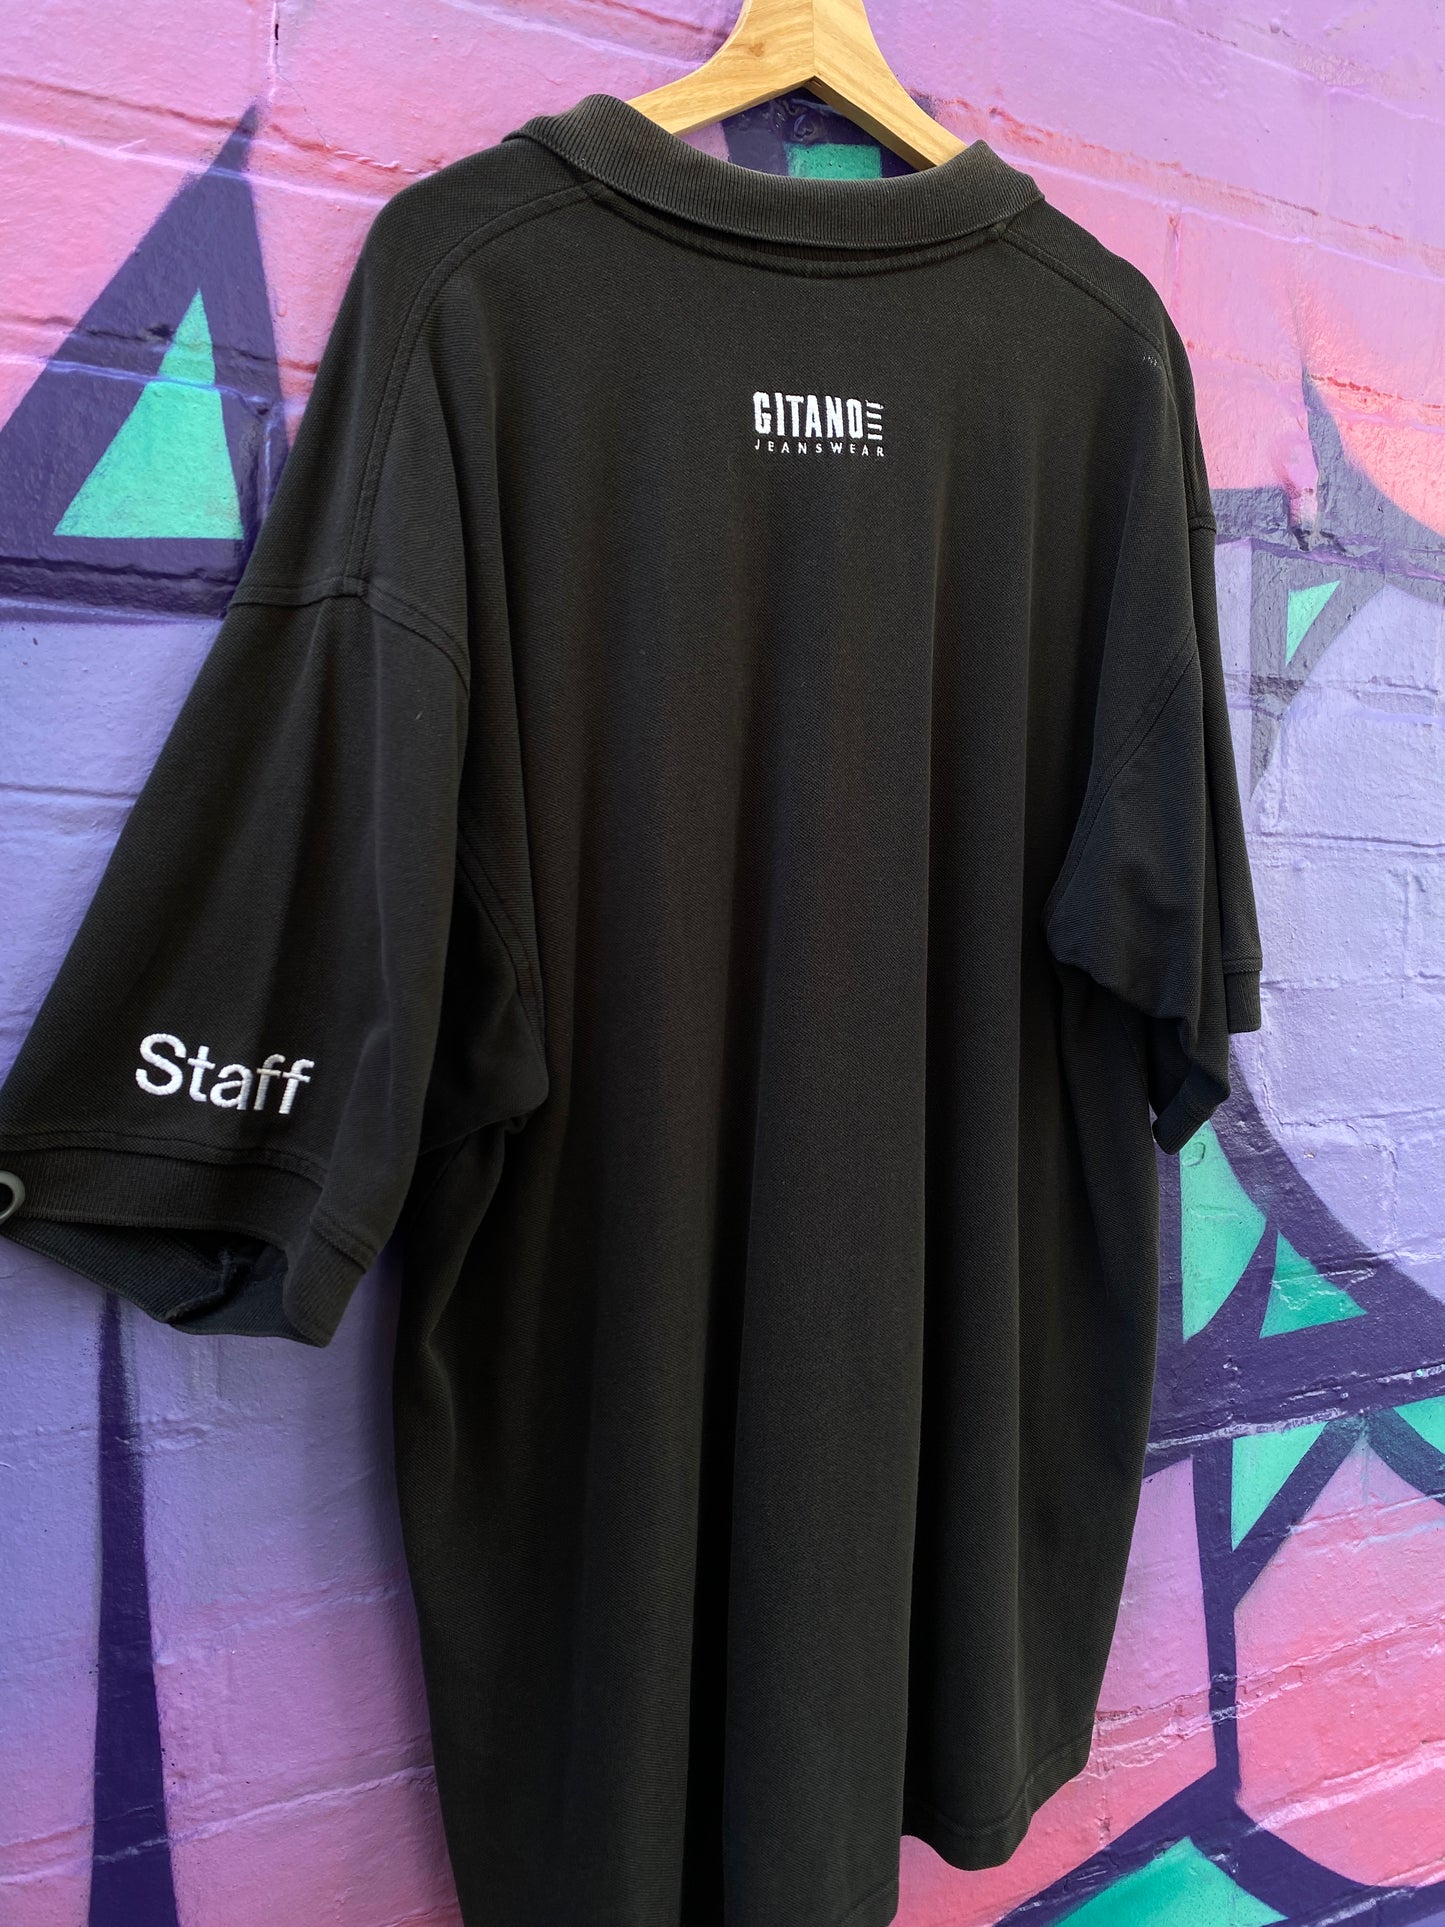 XL - Shania Twain Jeanswear Staff Black Polo Shirt